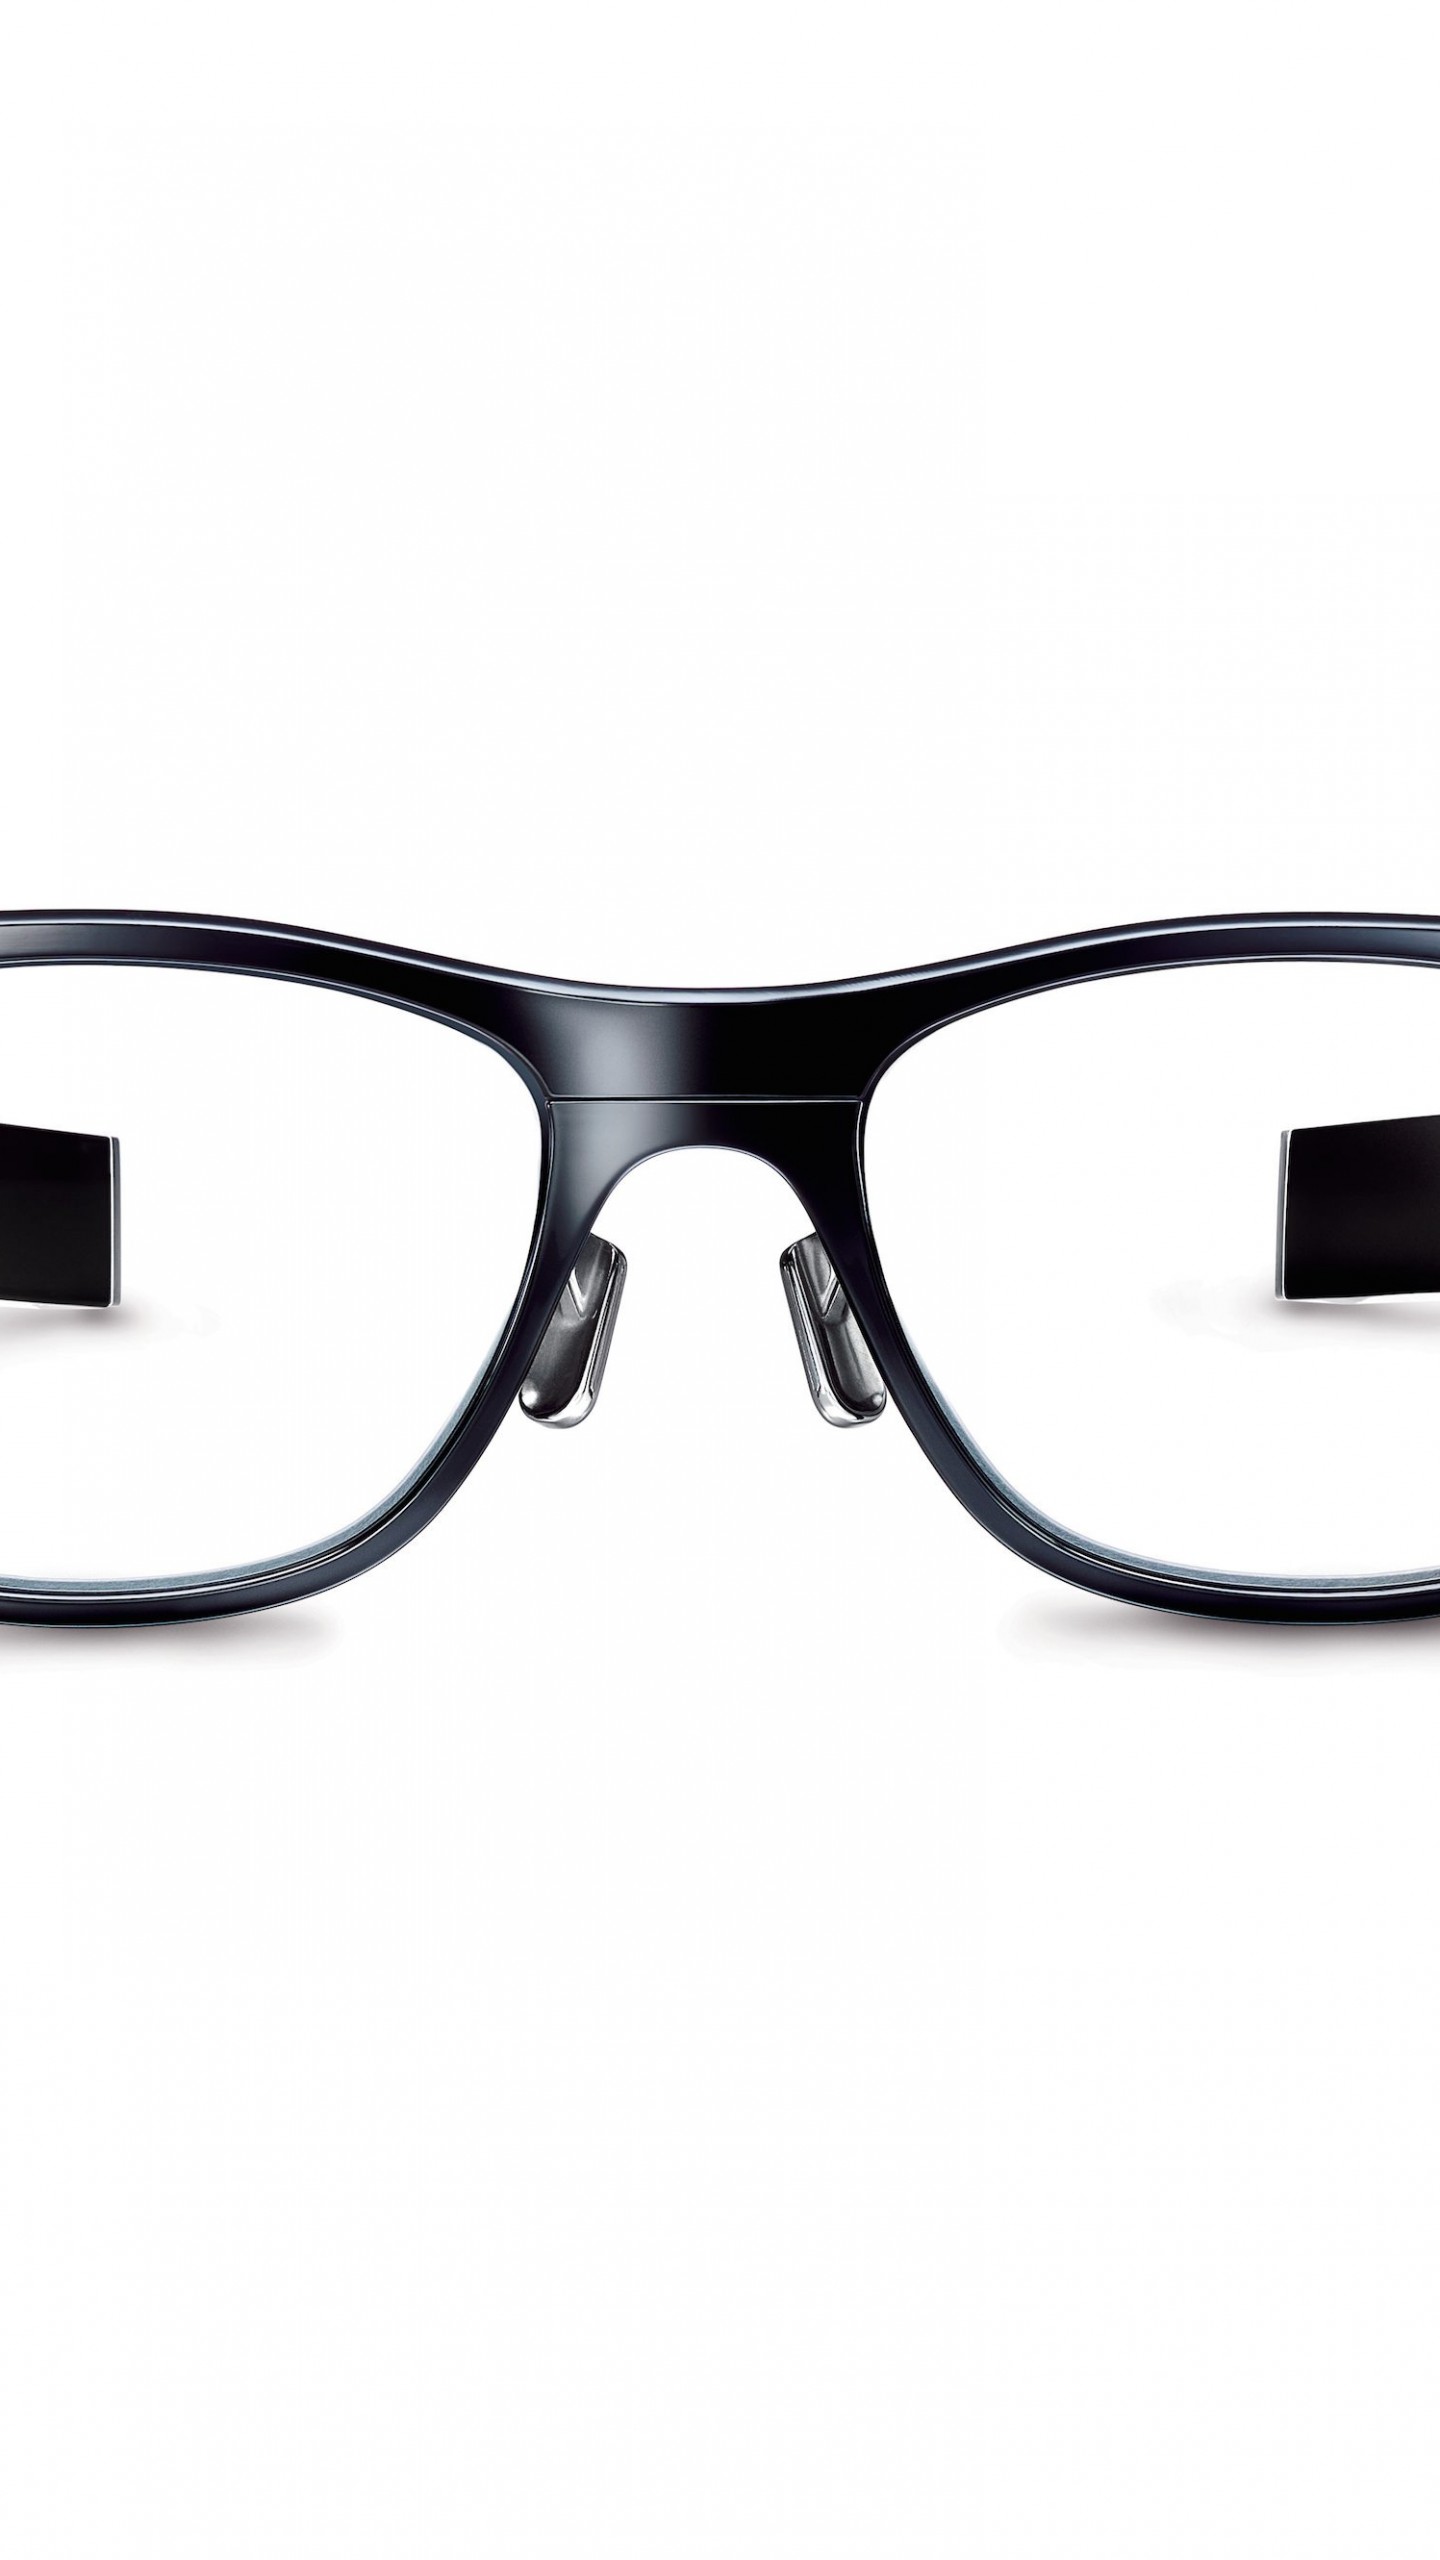 Jins Meme Smart Glasses Wallpaper for SAMSUNG Galaxy Note 4